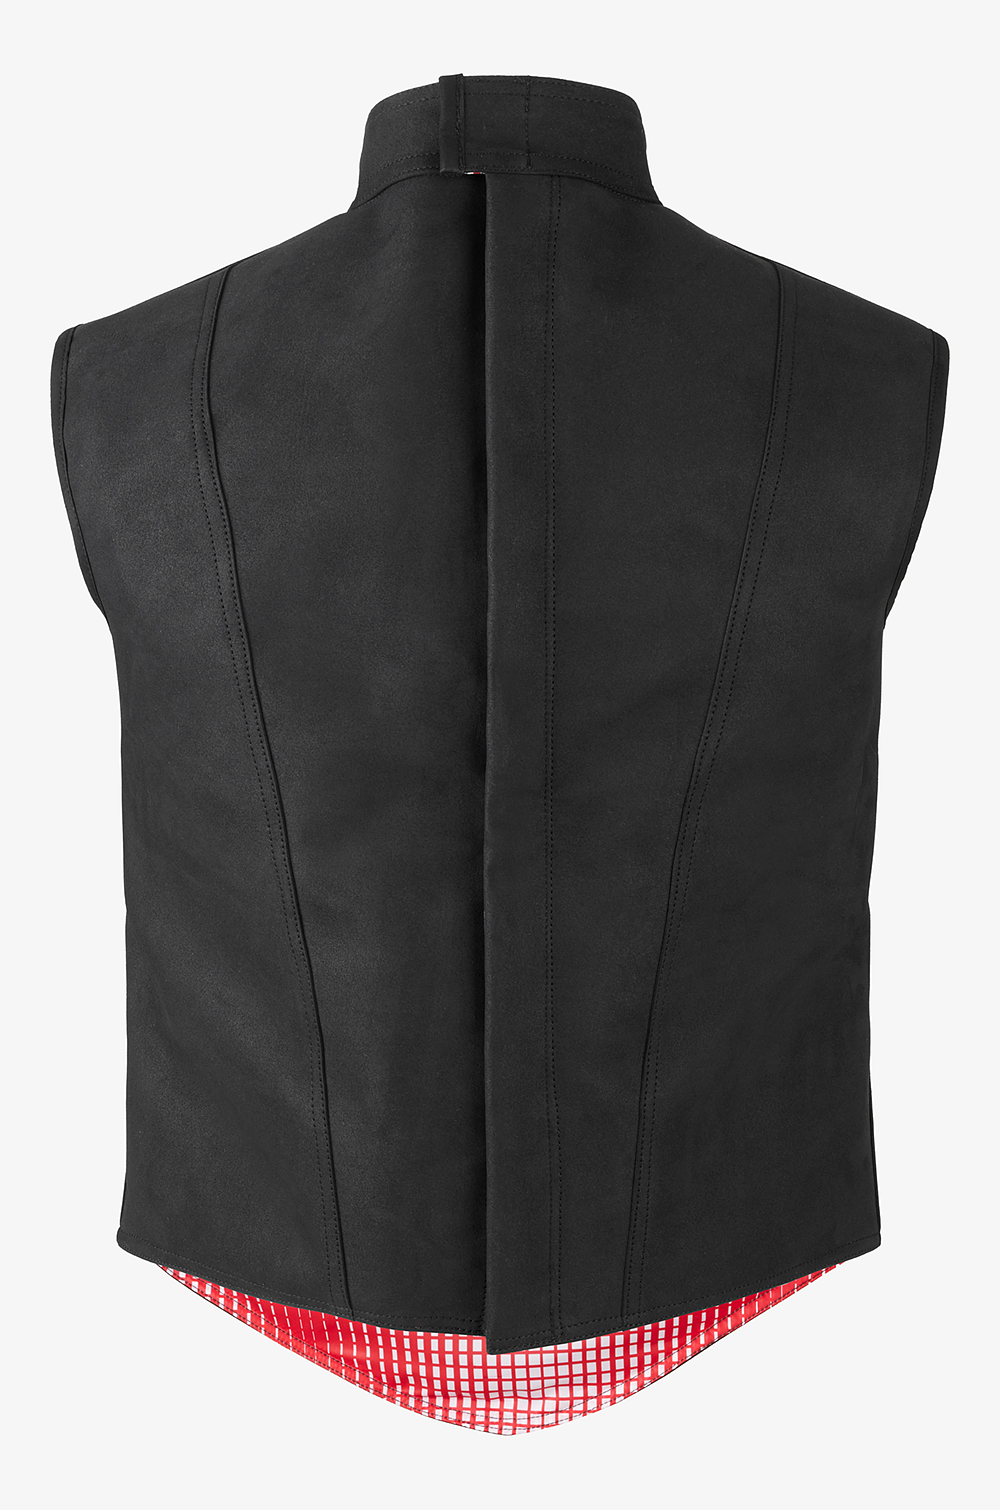 Alcantex Coach Vest w/o Sleeves Men